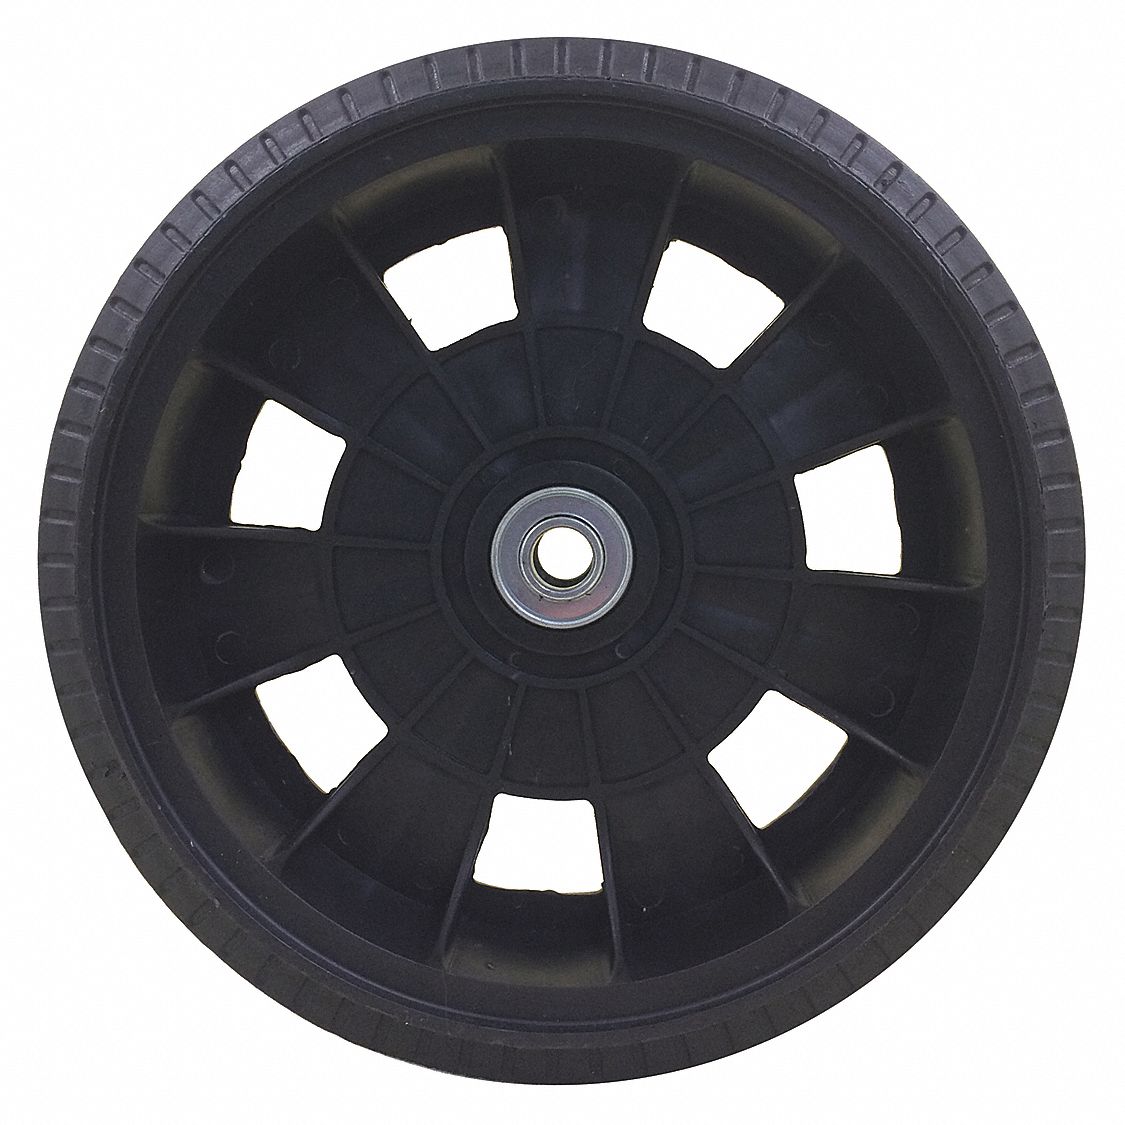 36LE94 - Flat Free Wheel Polyurethane 250lb Black